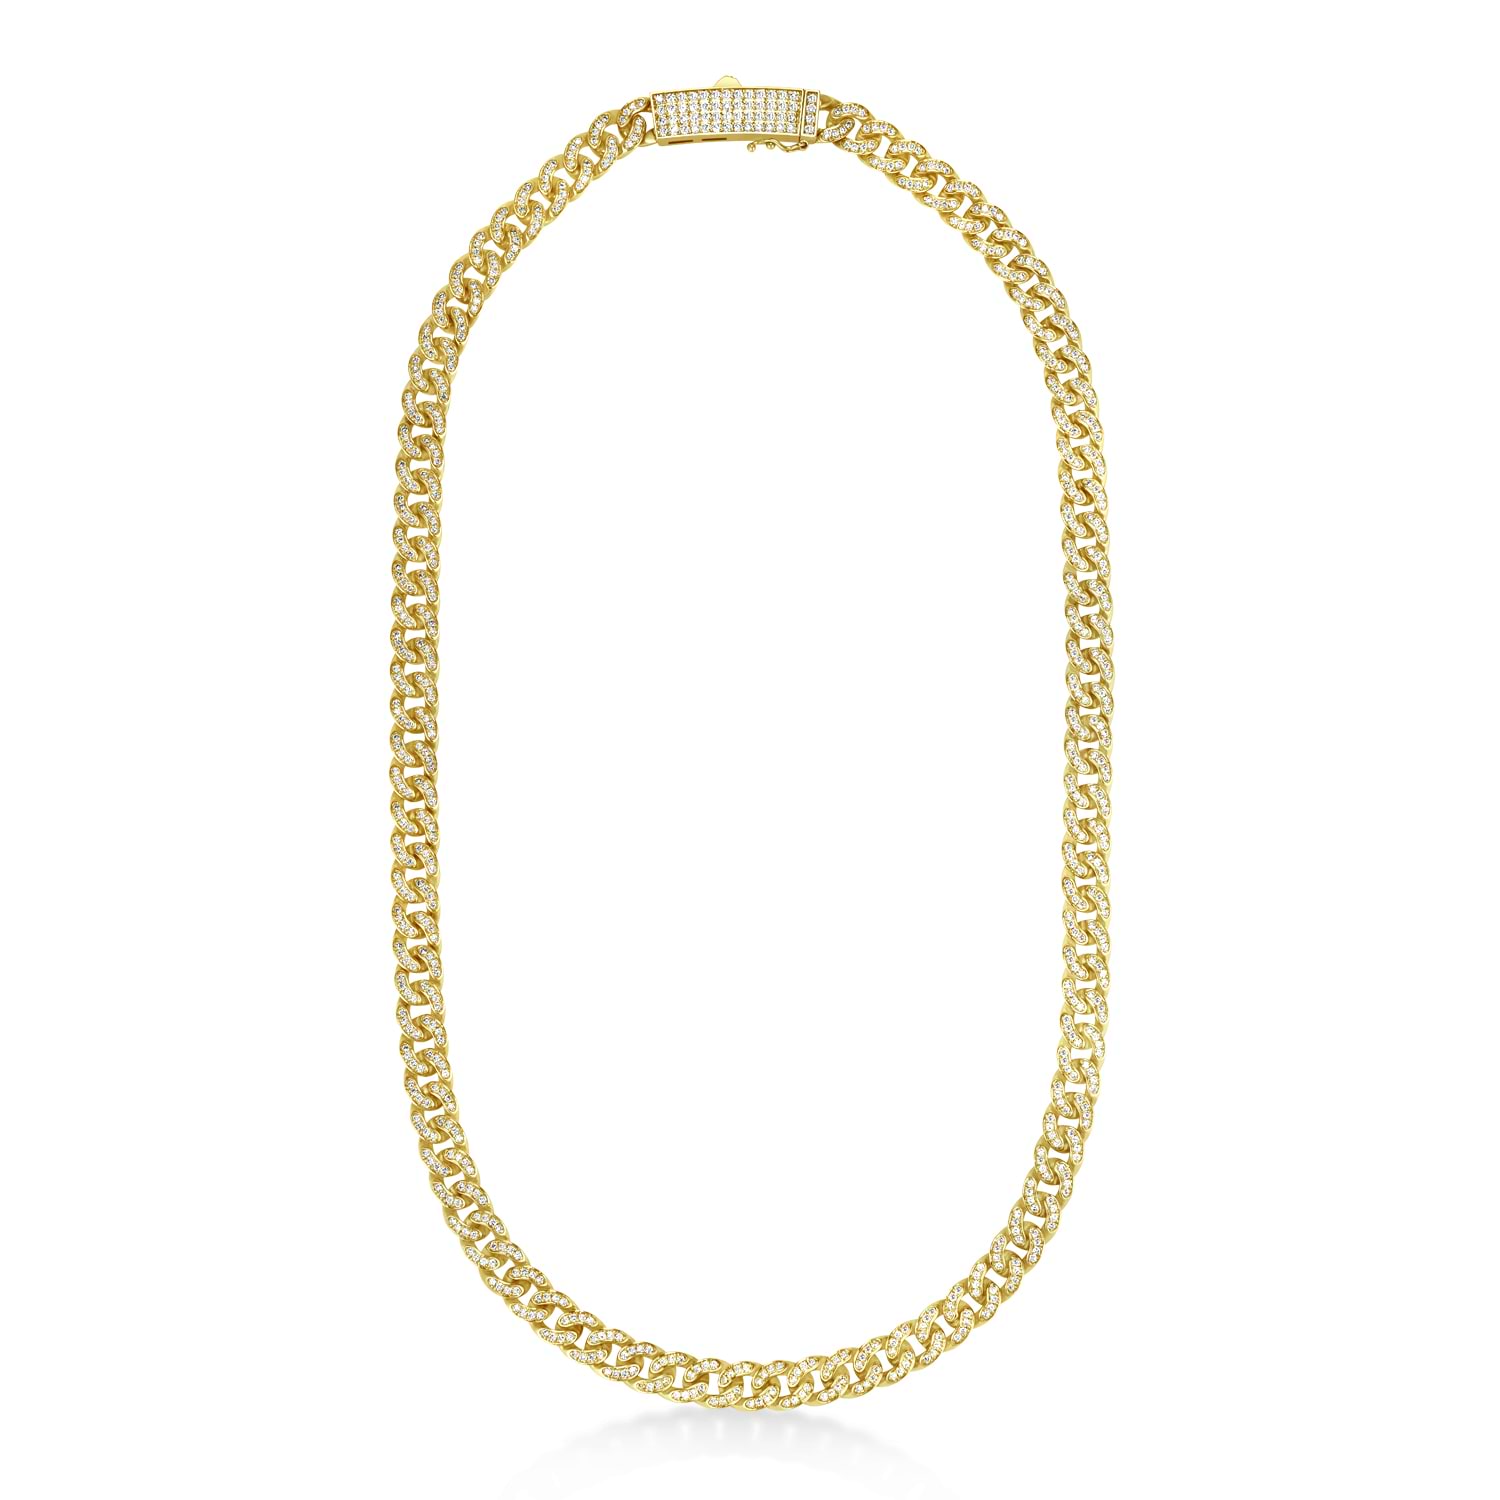 Diamond Miami Cuban Chain Necklace 14k Yellow Gold (8.00ct)